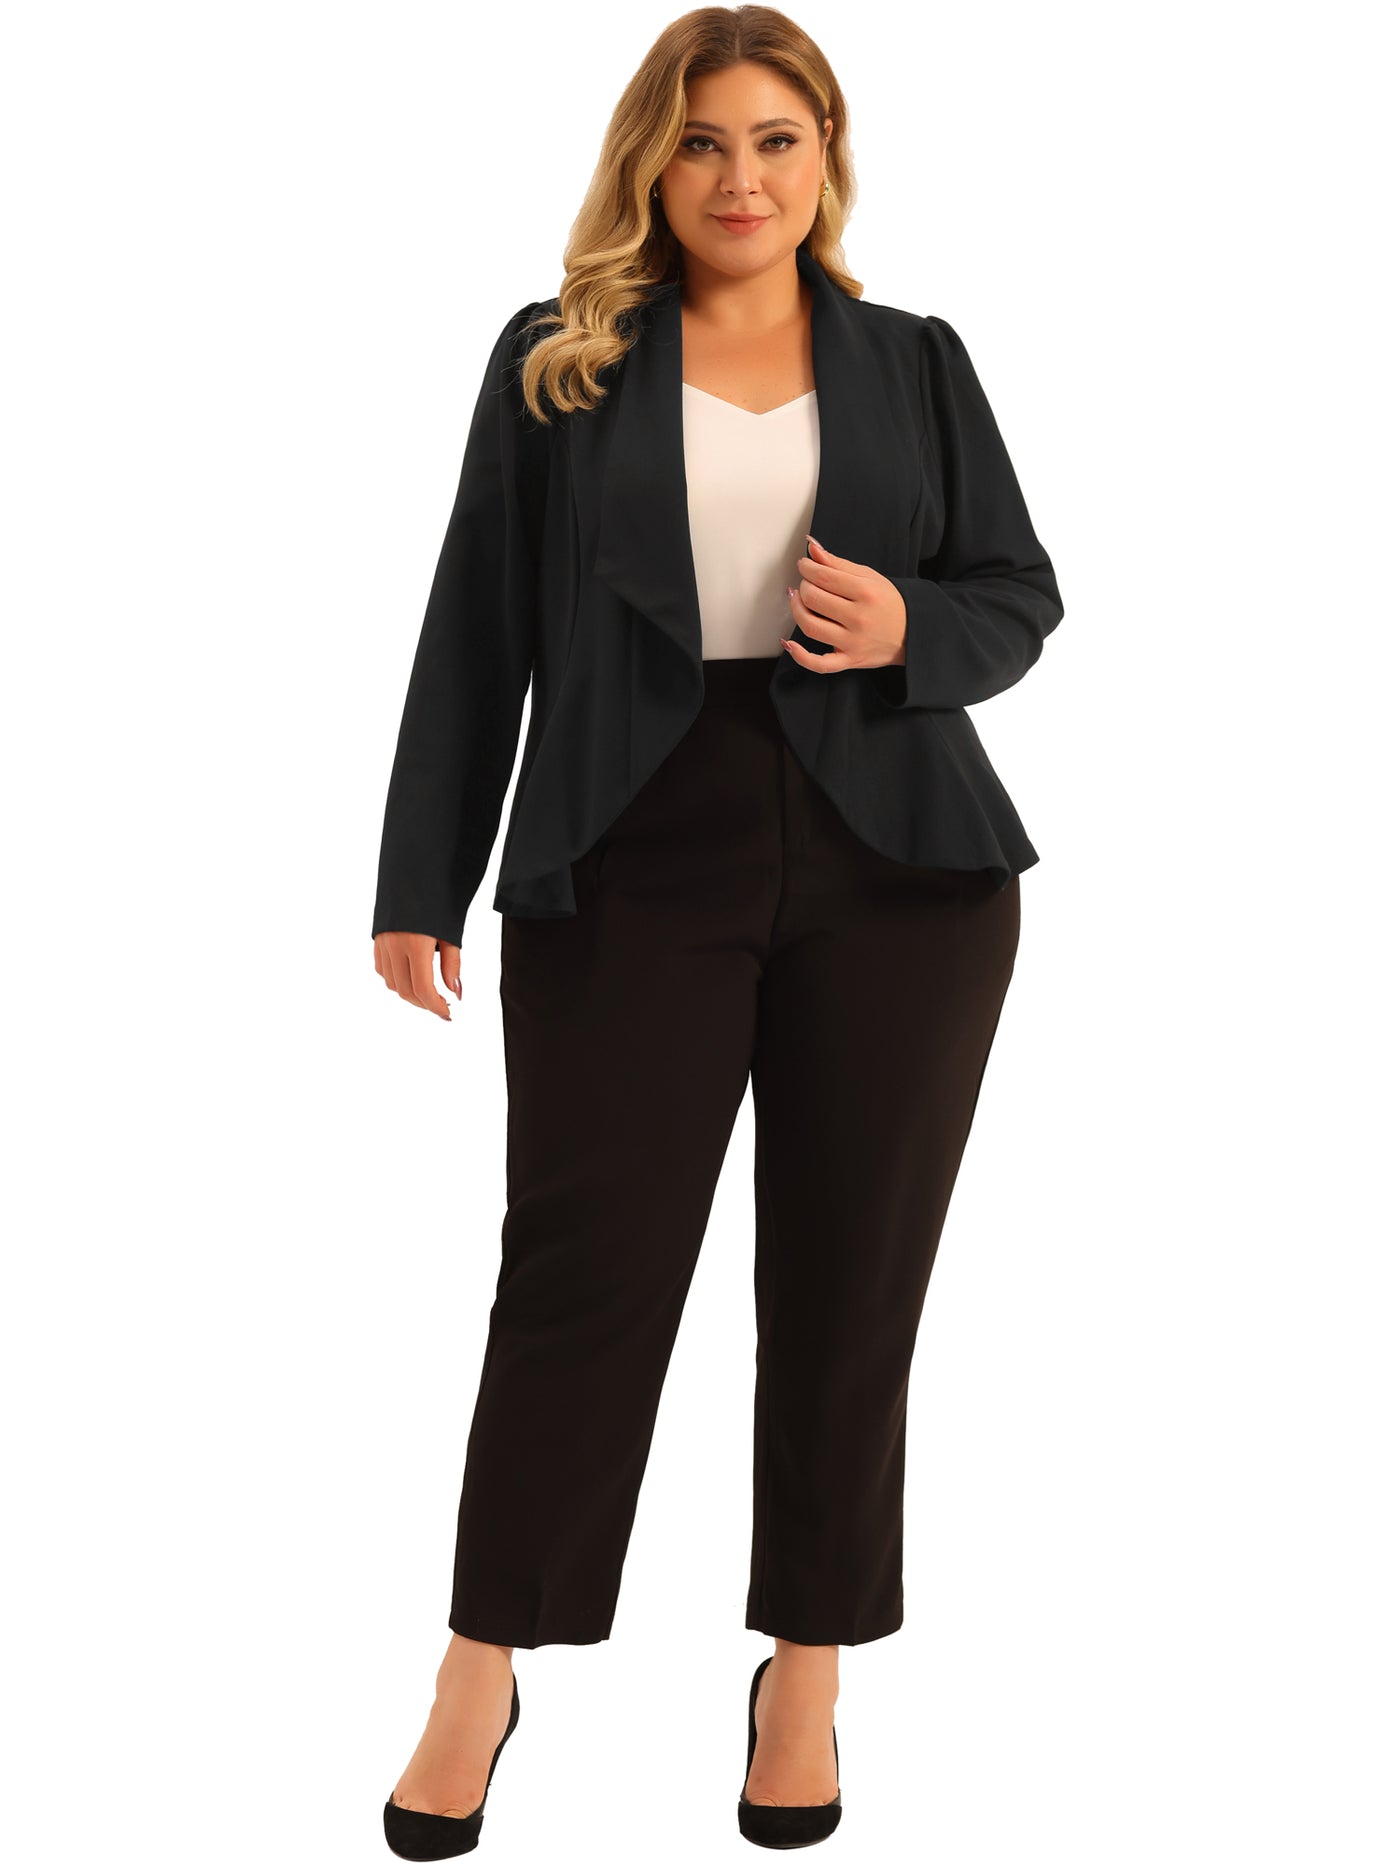 Bublédon Plus Size Jacket for Women Ruffle Front Work Long Sleeve Cardigans Jackets